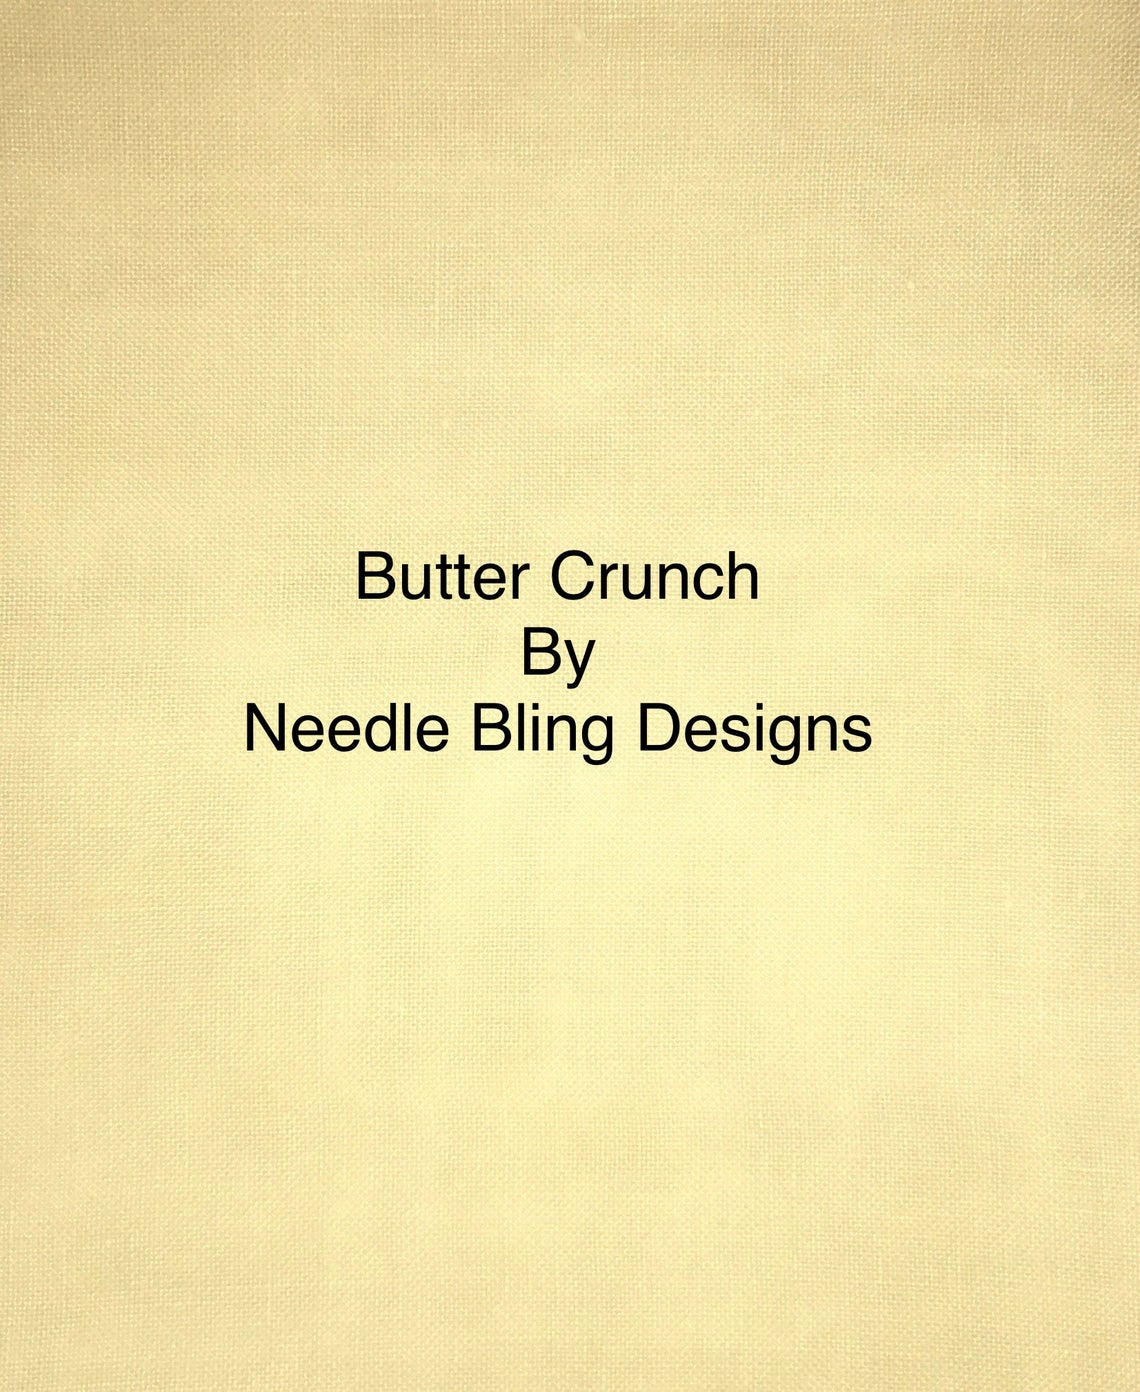 Butter Crunch Hand Dyed Aida/Linen - Needle Bling Designs - Cross Stitch Fabric